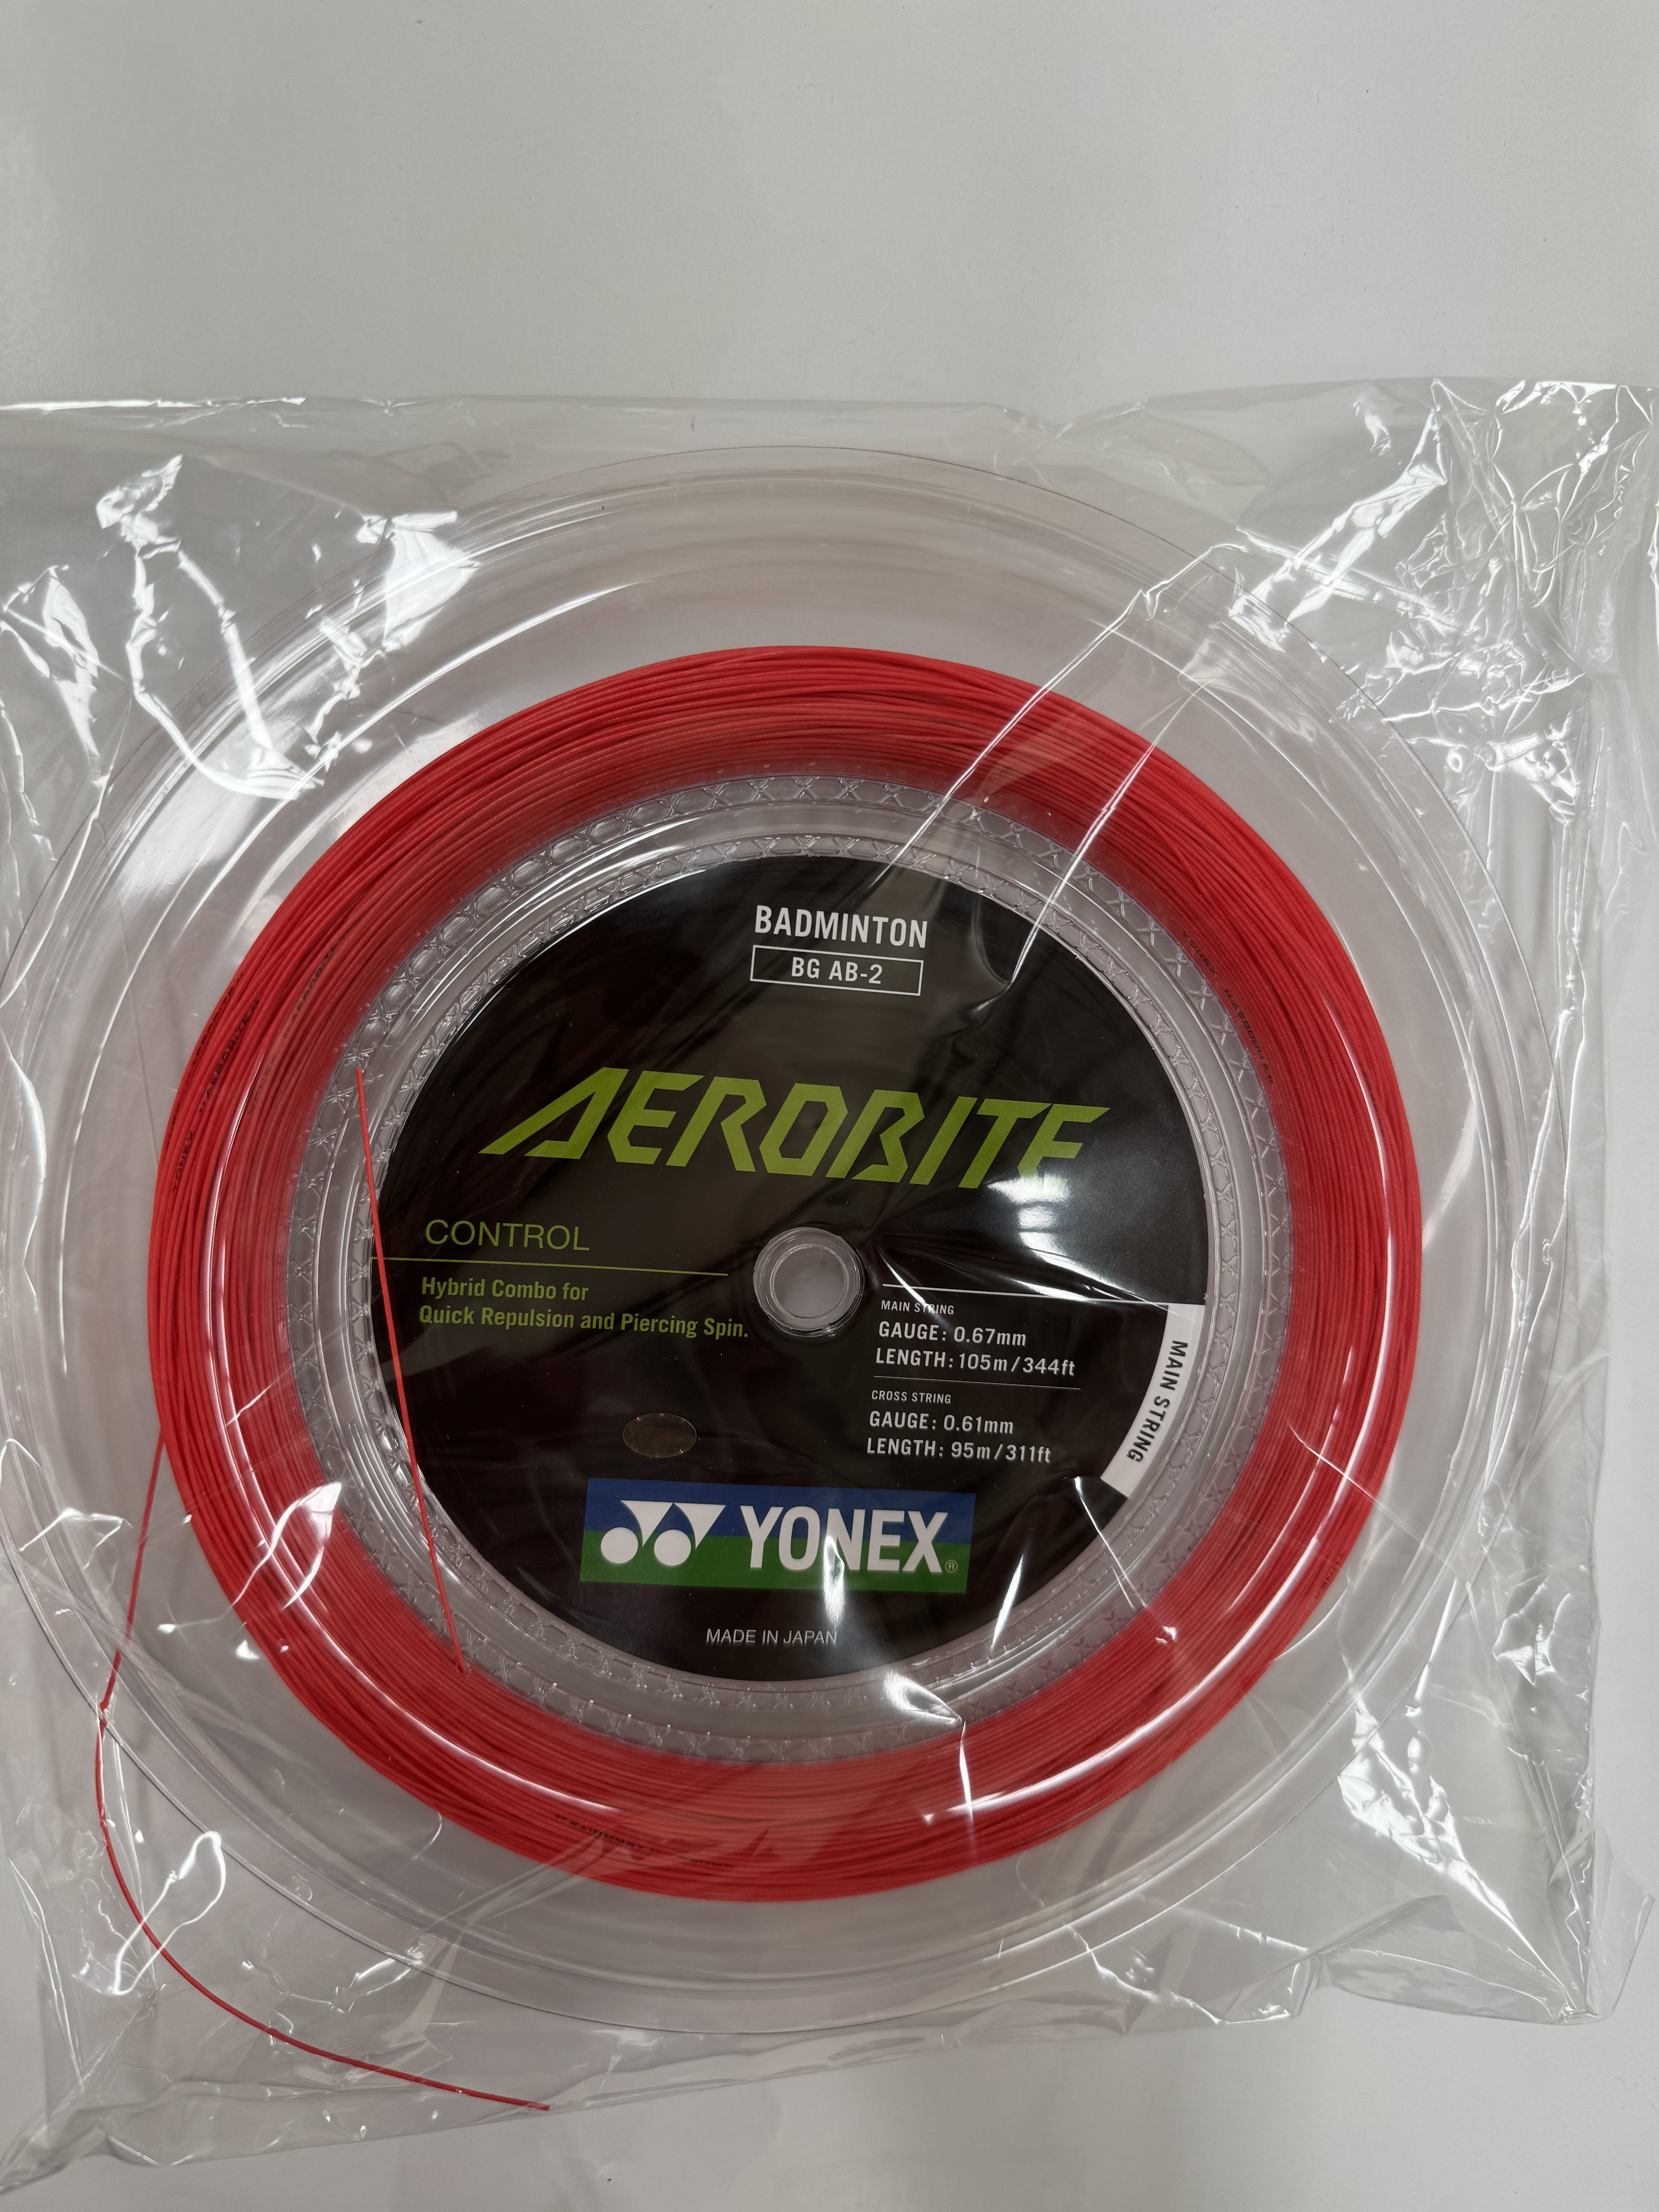 YONEX AeroBite Badminton Coil String - BGAB-2 - 200m - White/Red